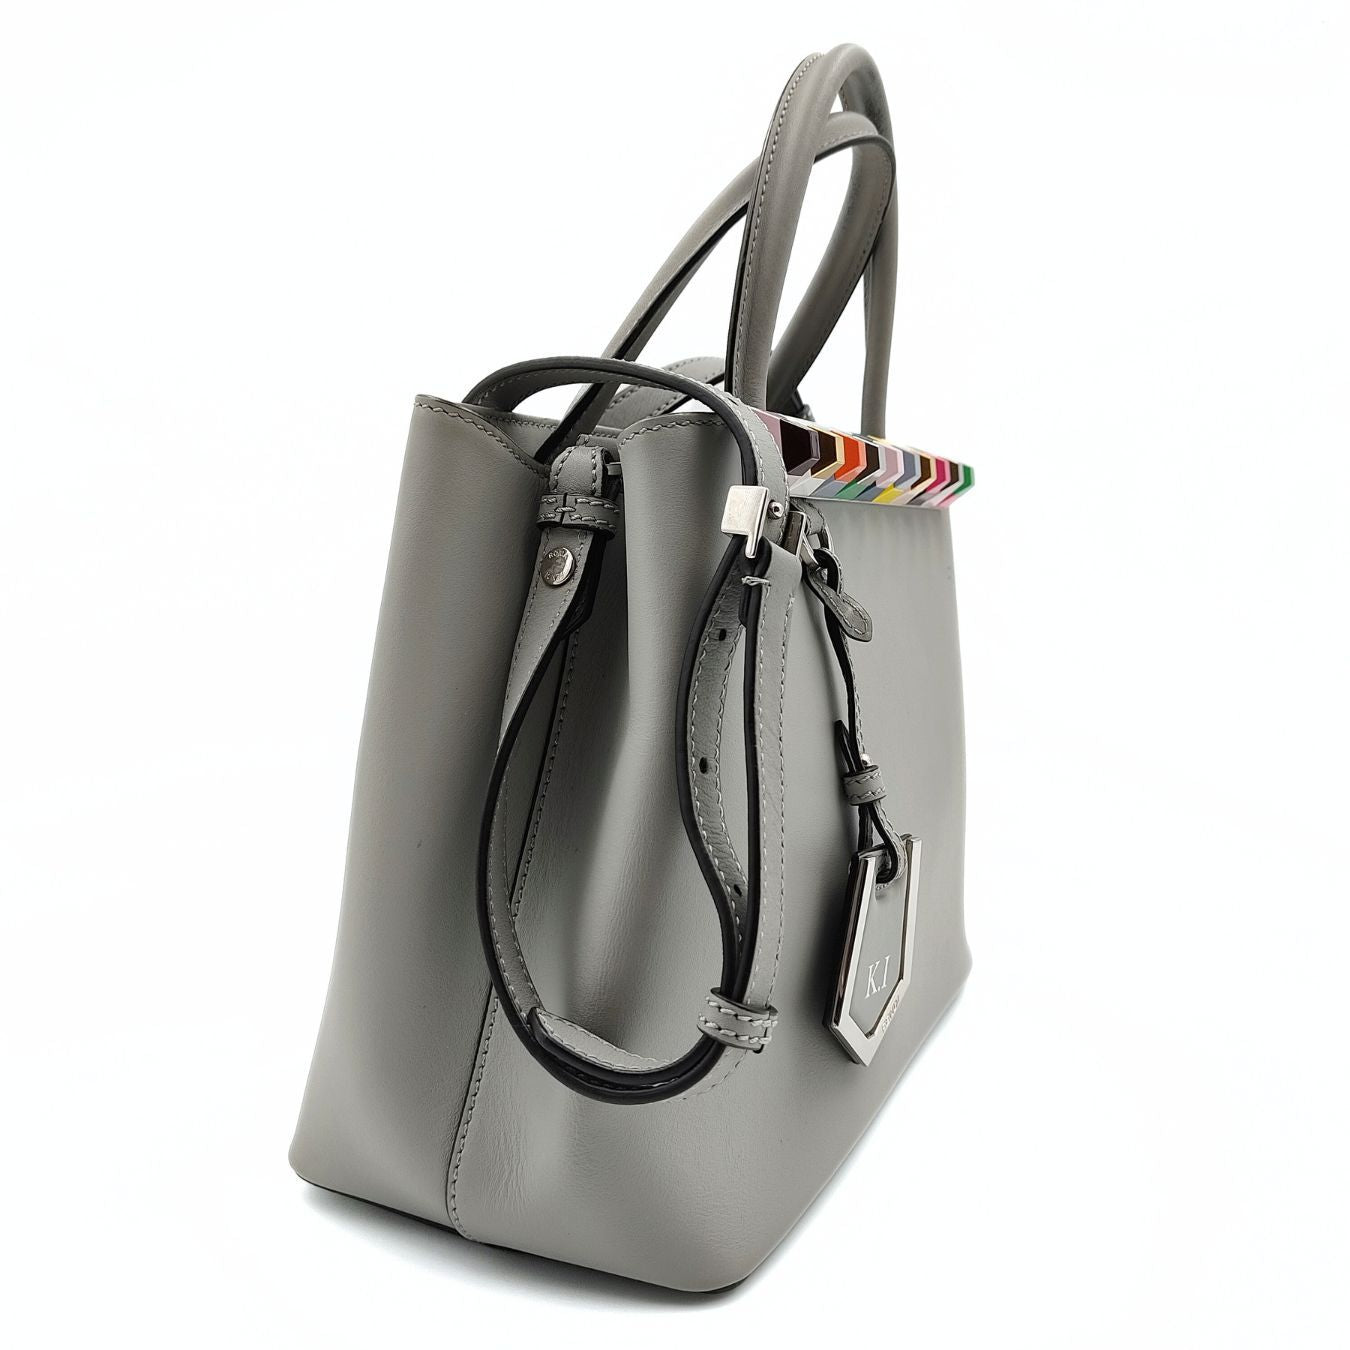 Fendi Fendi 2Jours shoulder bag in gray leather - '10s